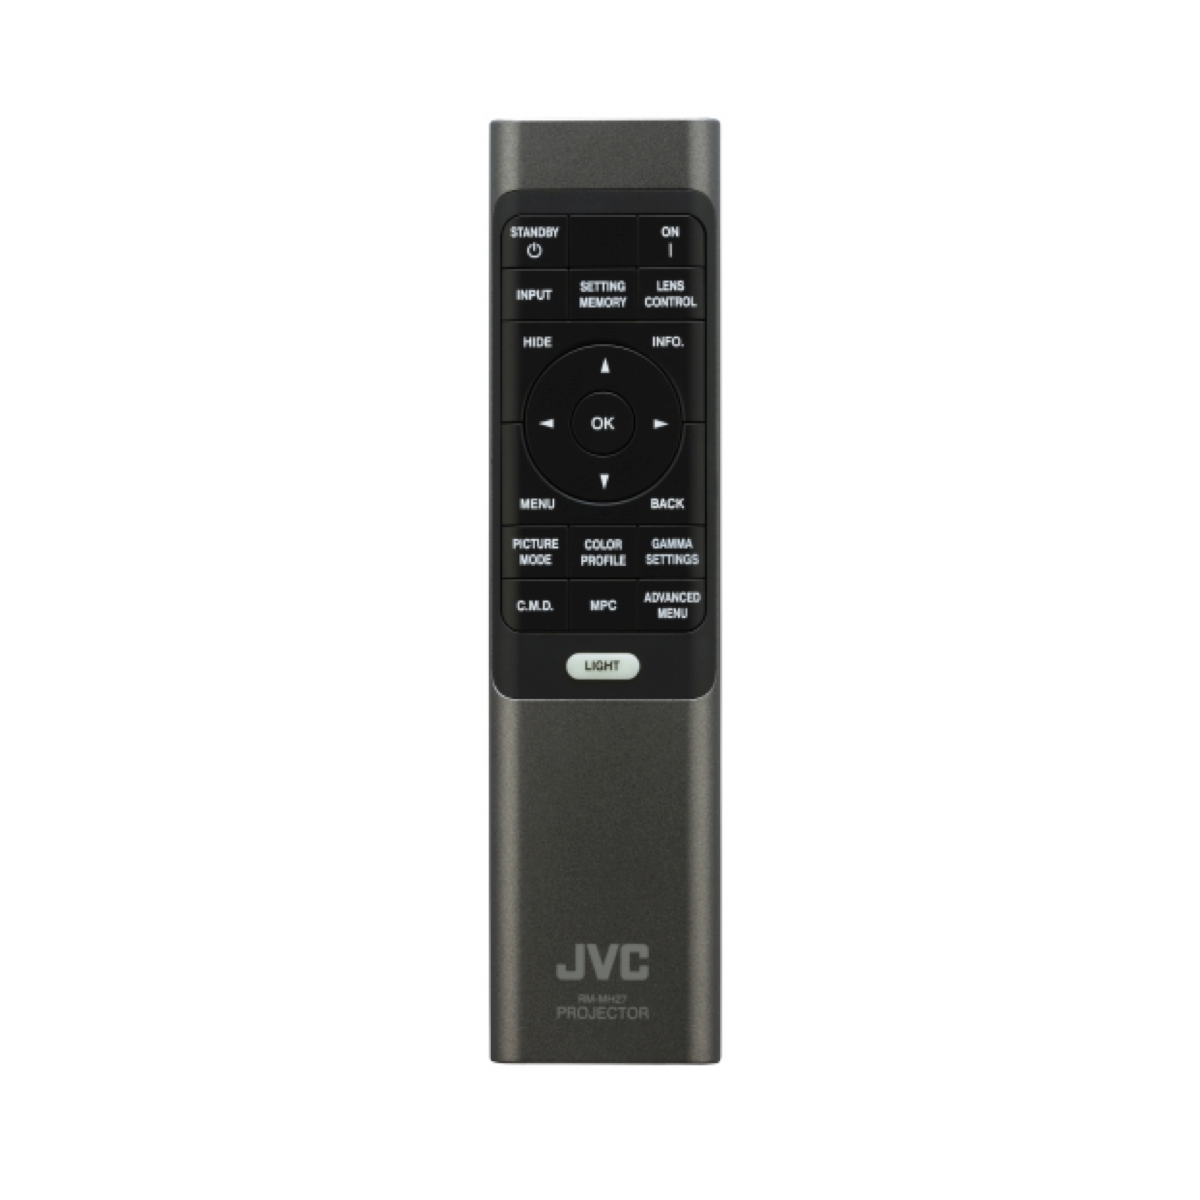 JVC DLA-NX9 8K e-shift Projector - AVStore